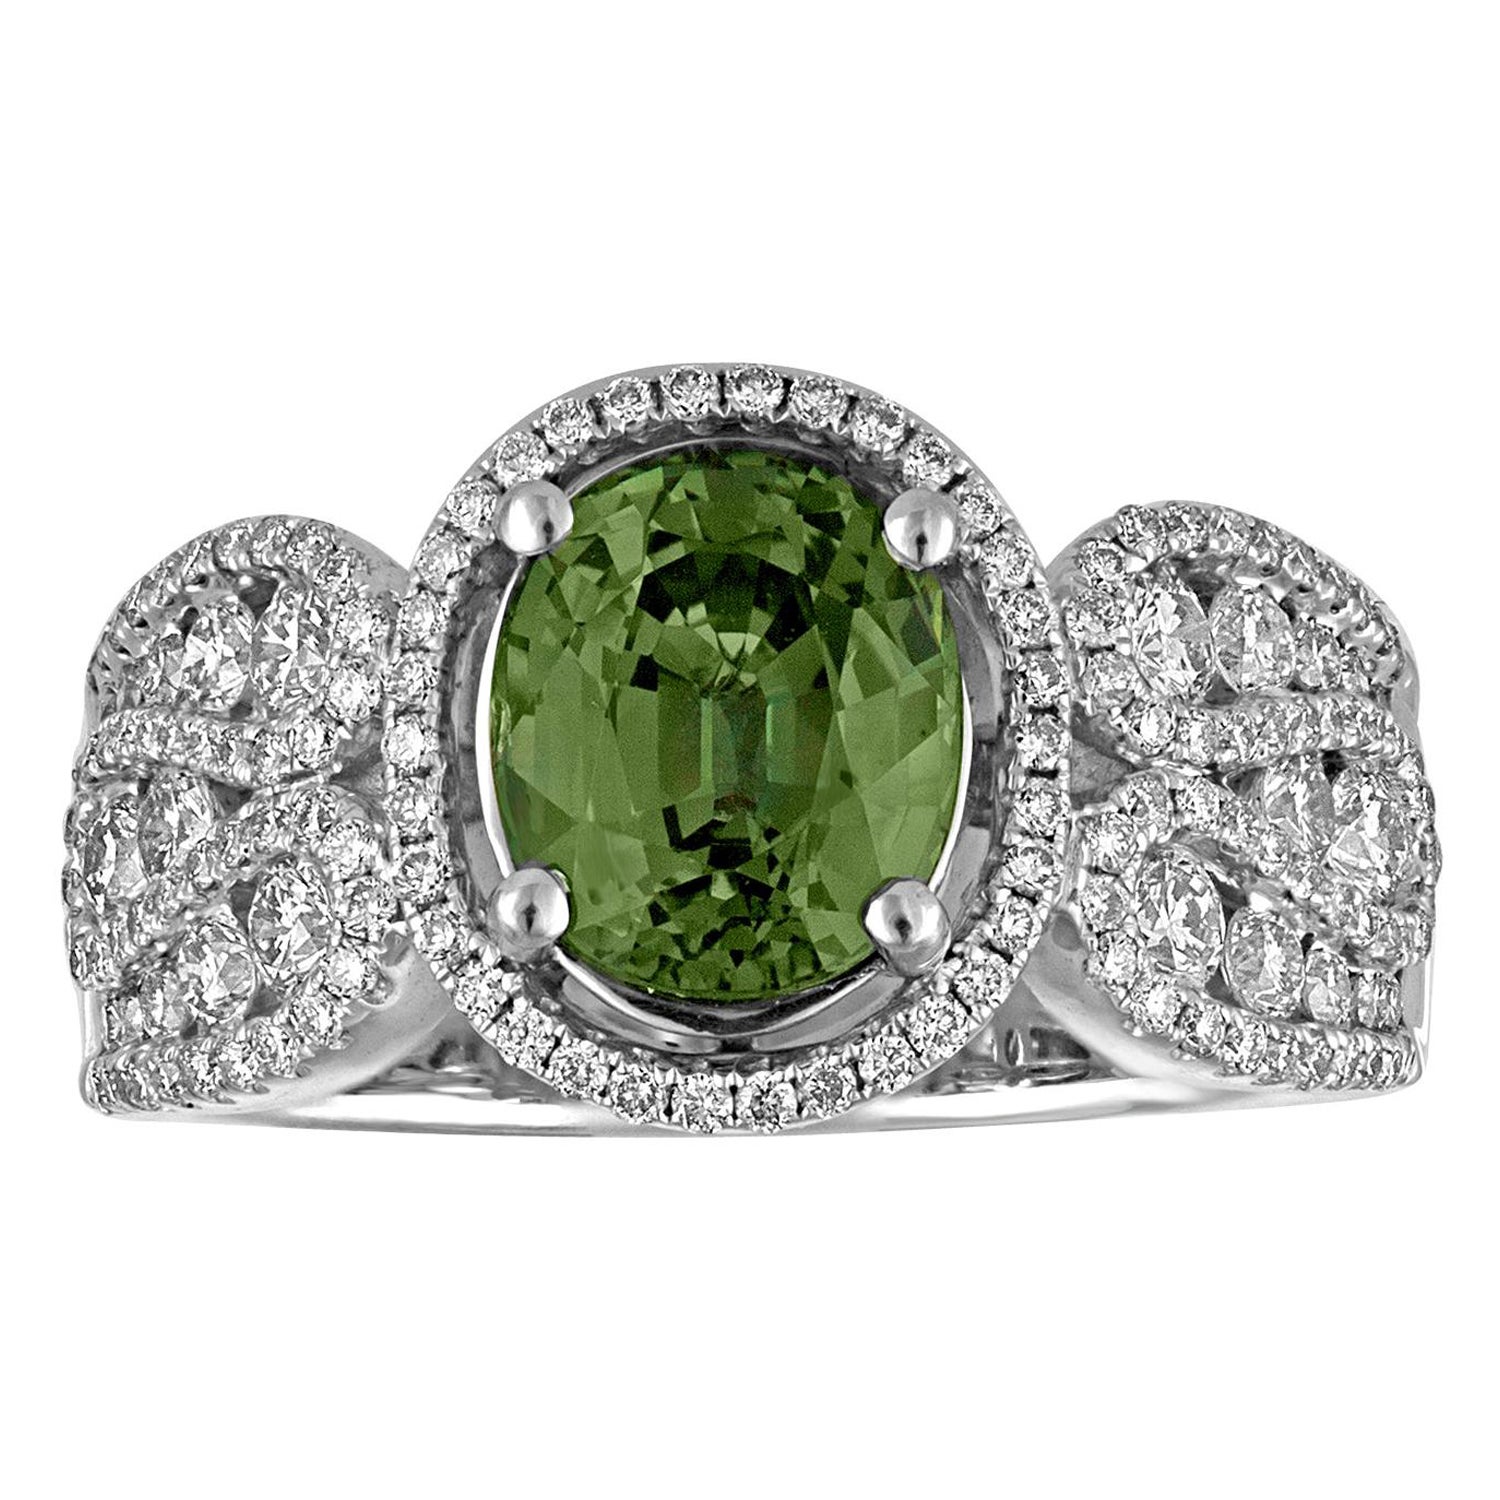 Goldring mit zertifiziertem 3,08 Karat ovalem grünem Saphir und Diamant